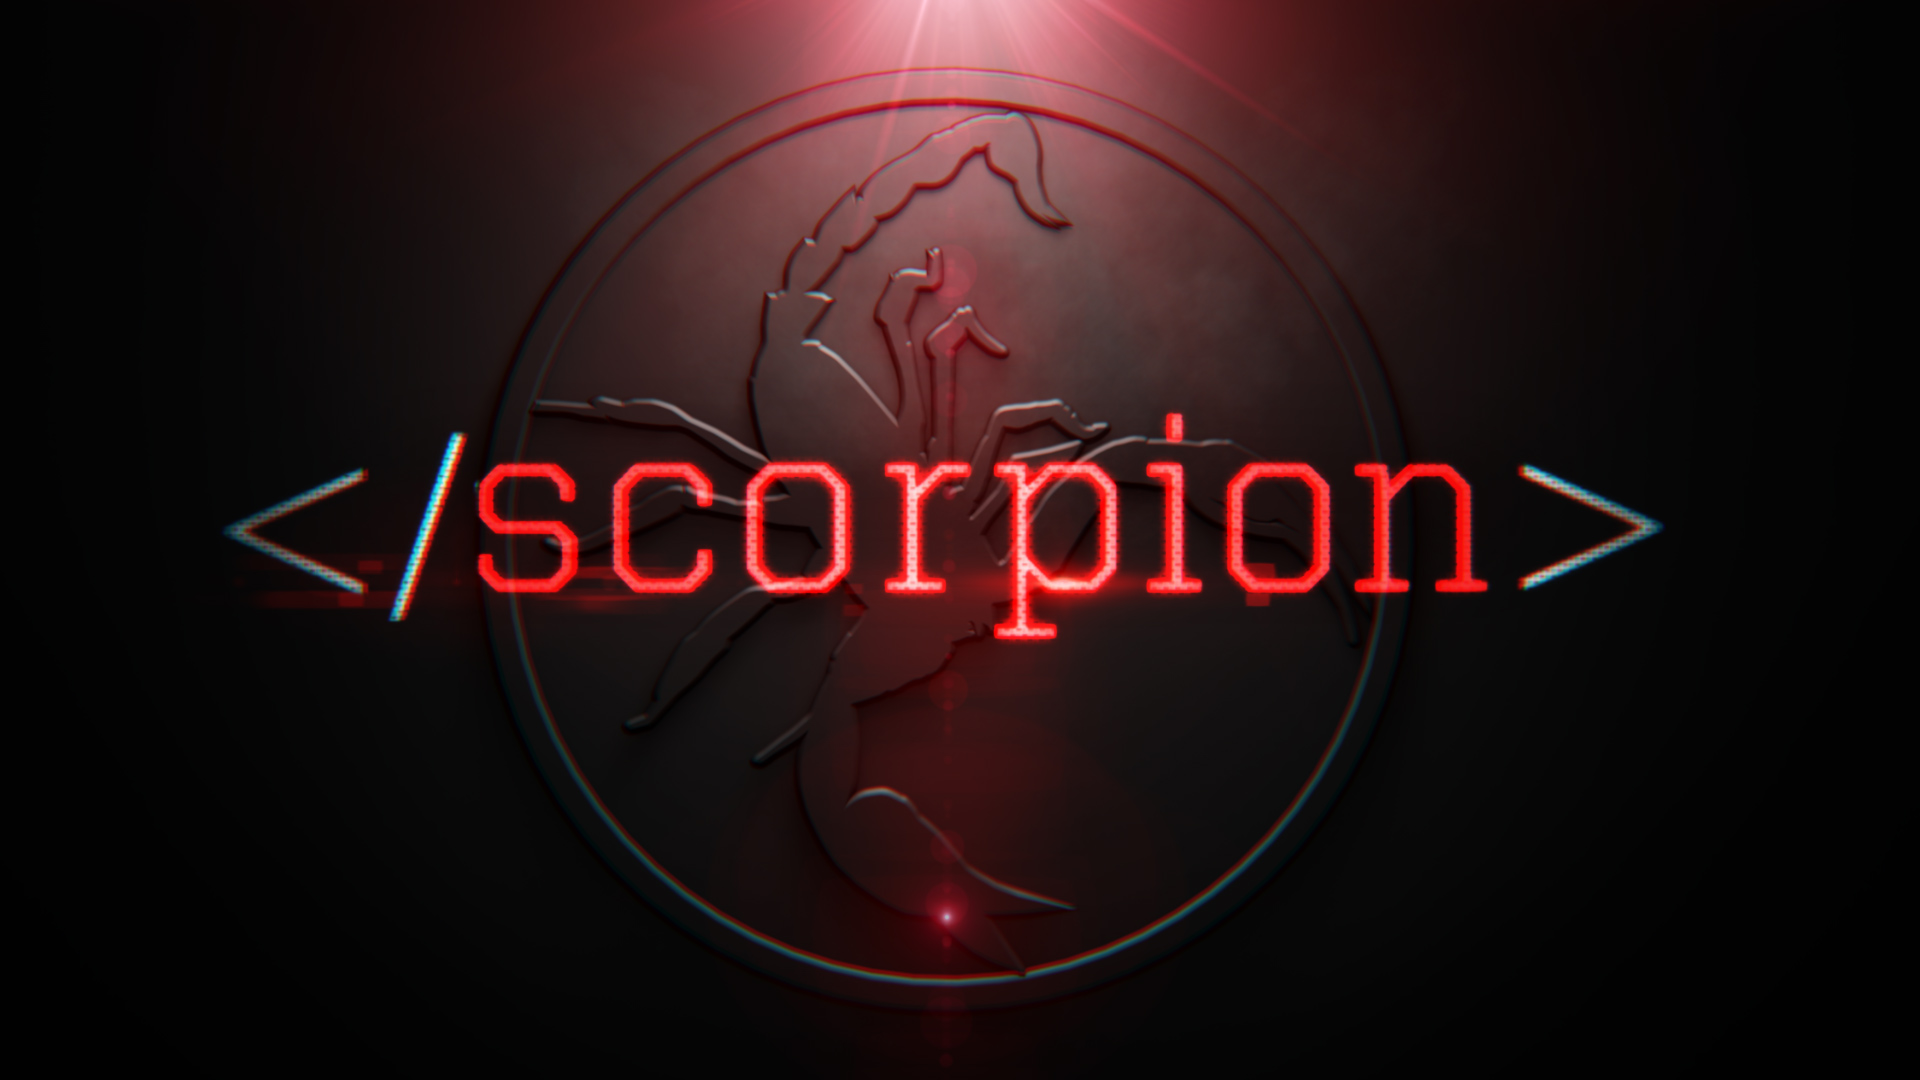 Scorpion show Logos